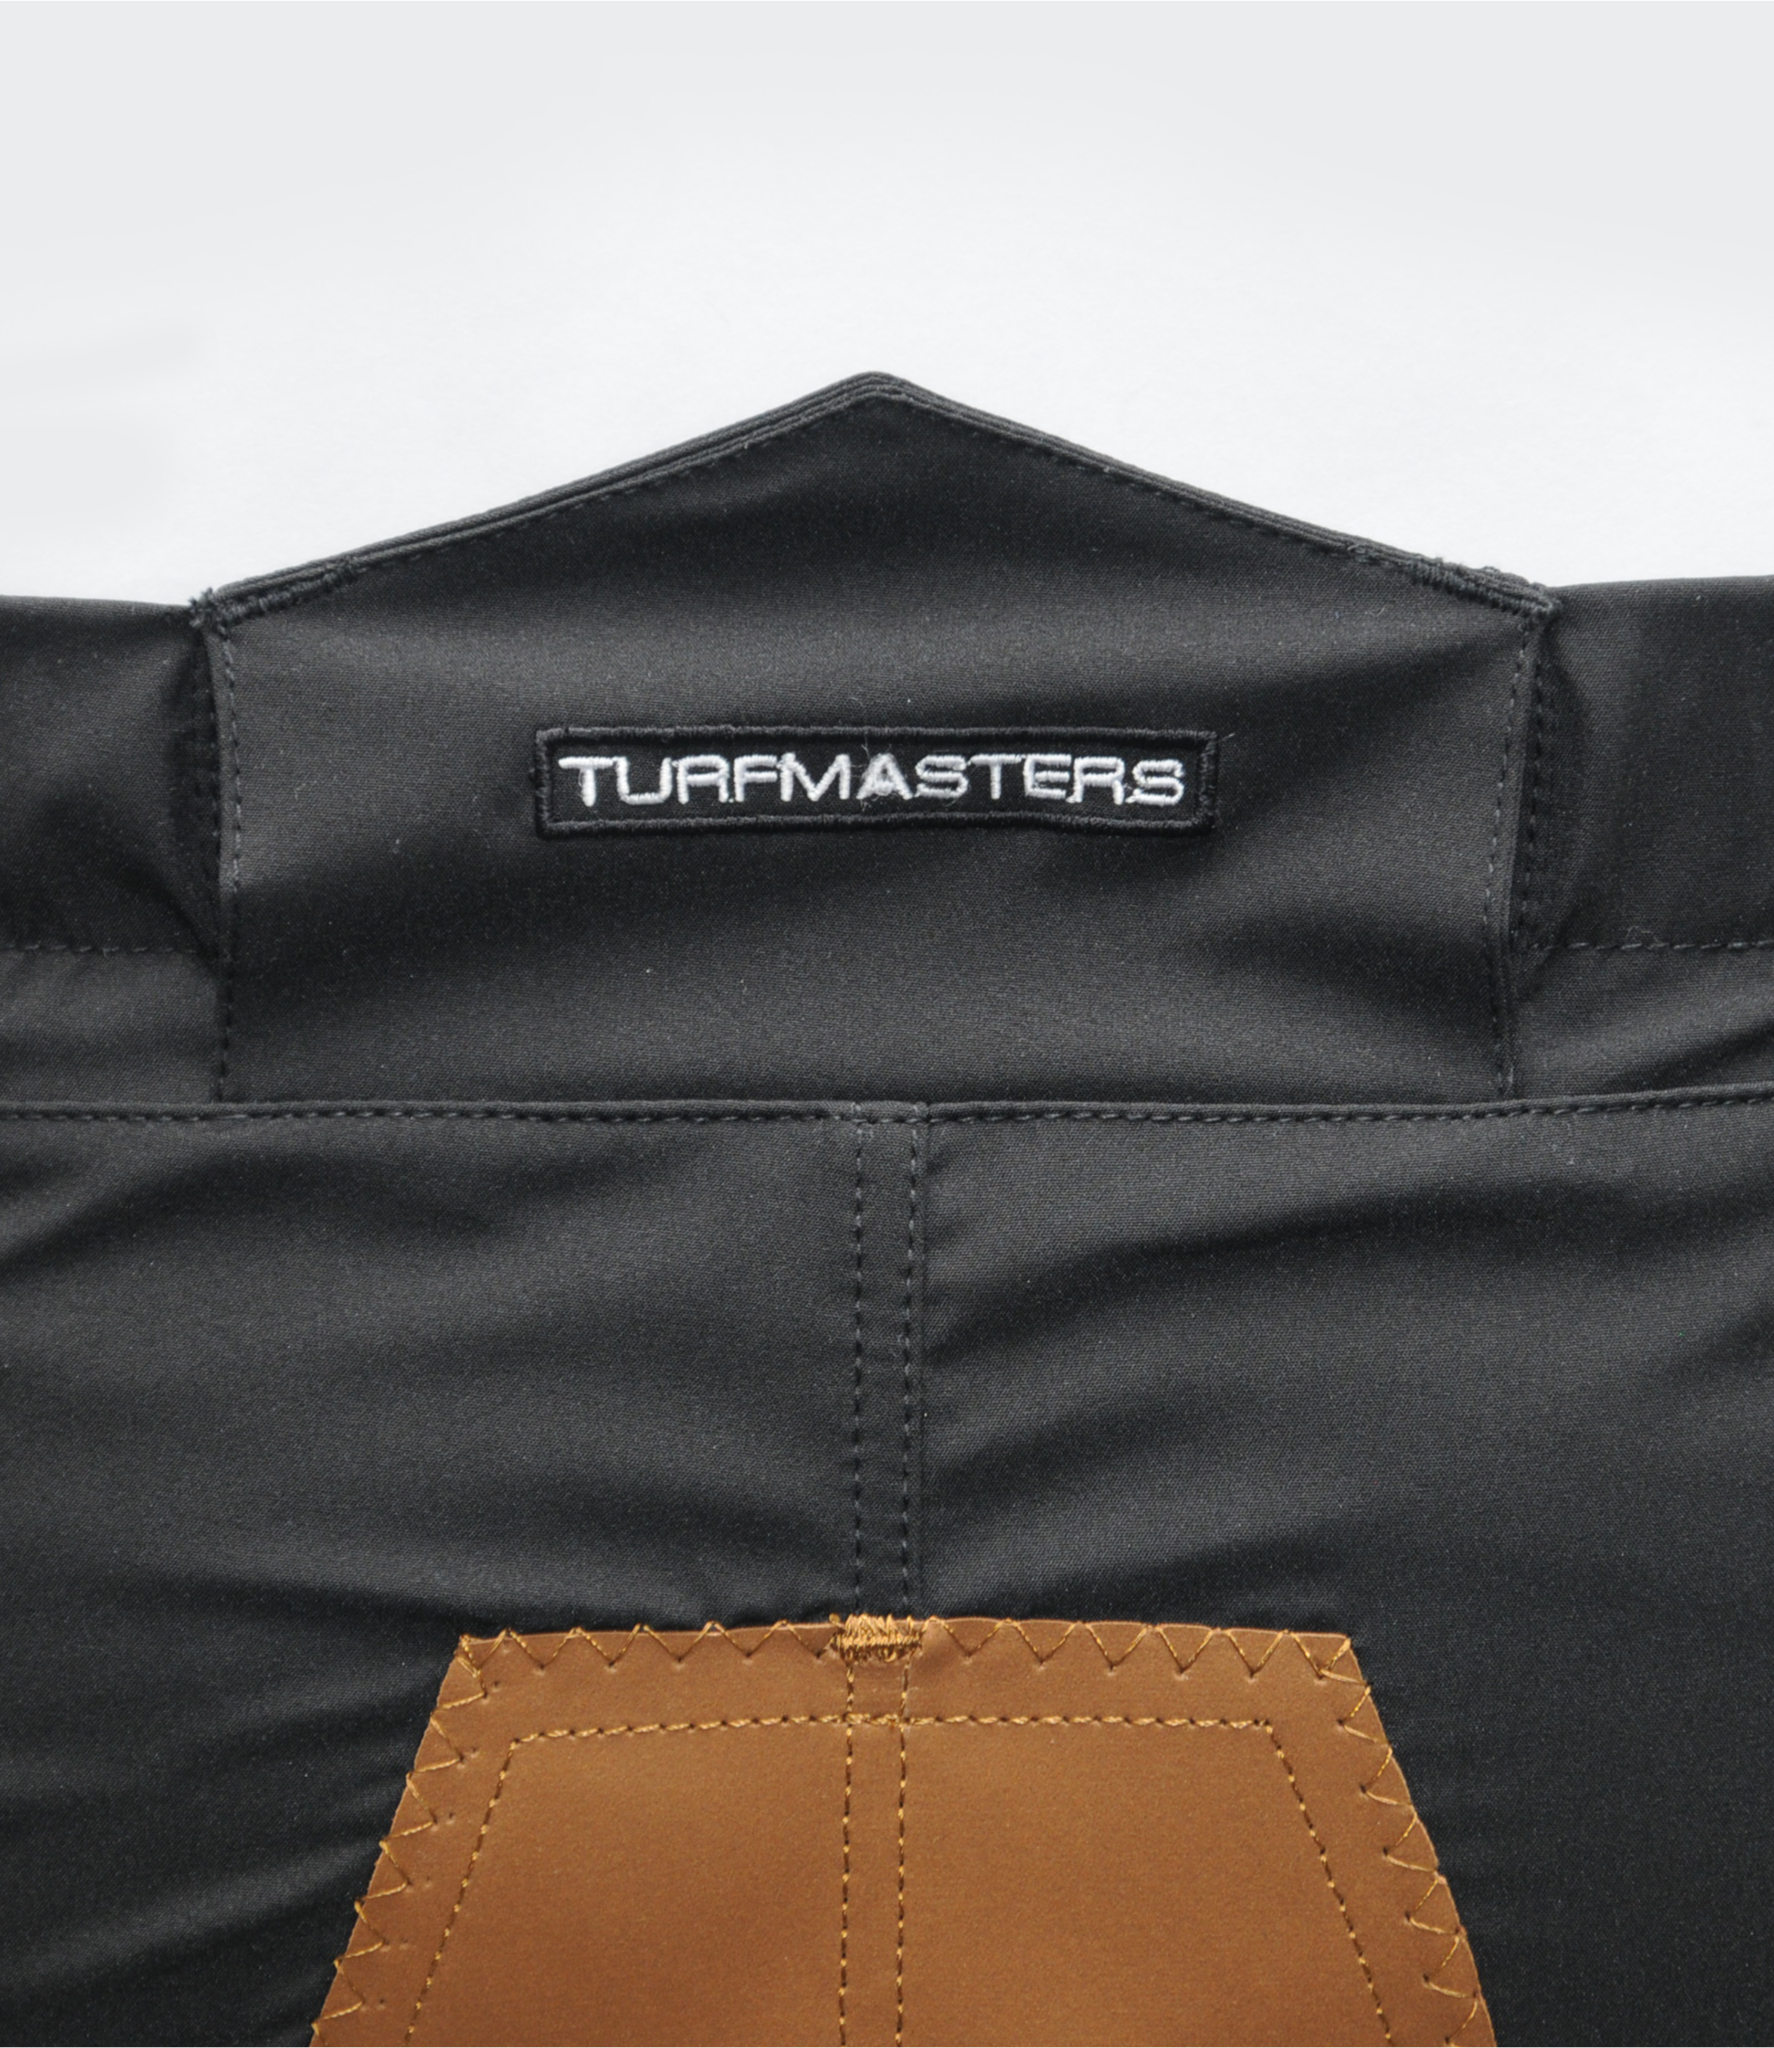 Turfmasters Water Resistant Exercise Breeches Black/Brown